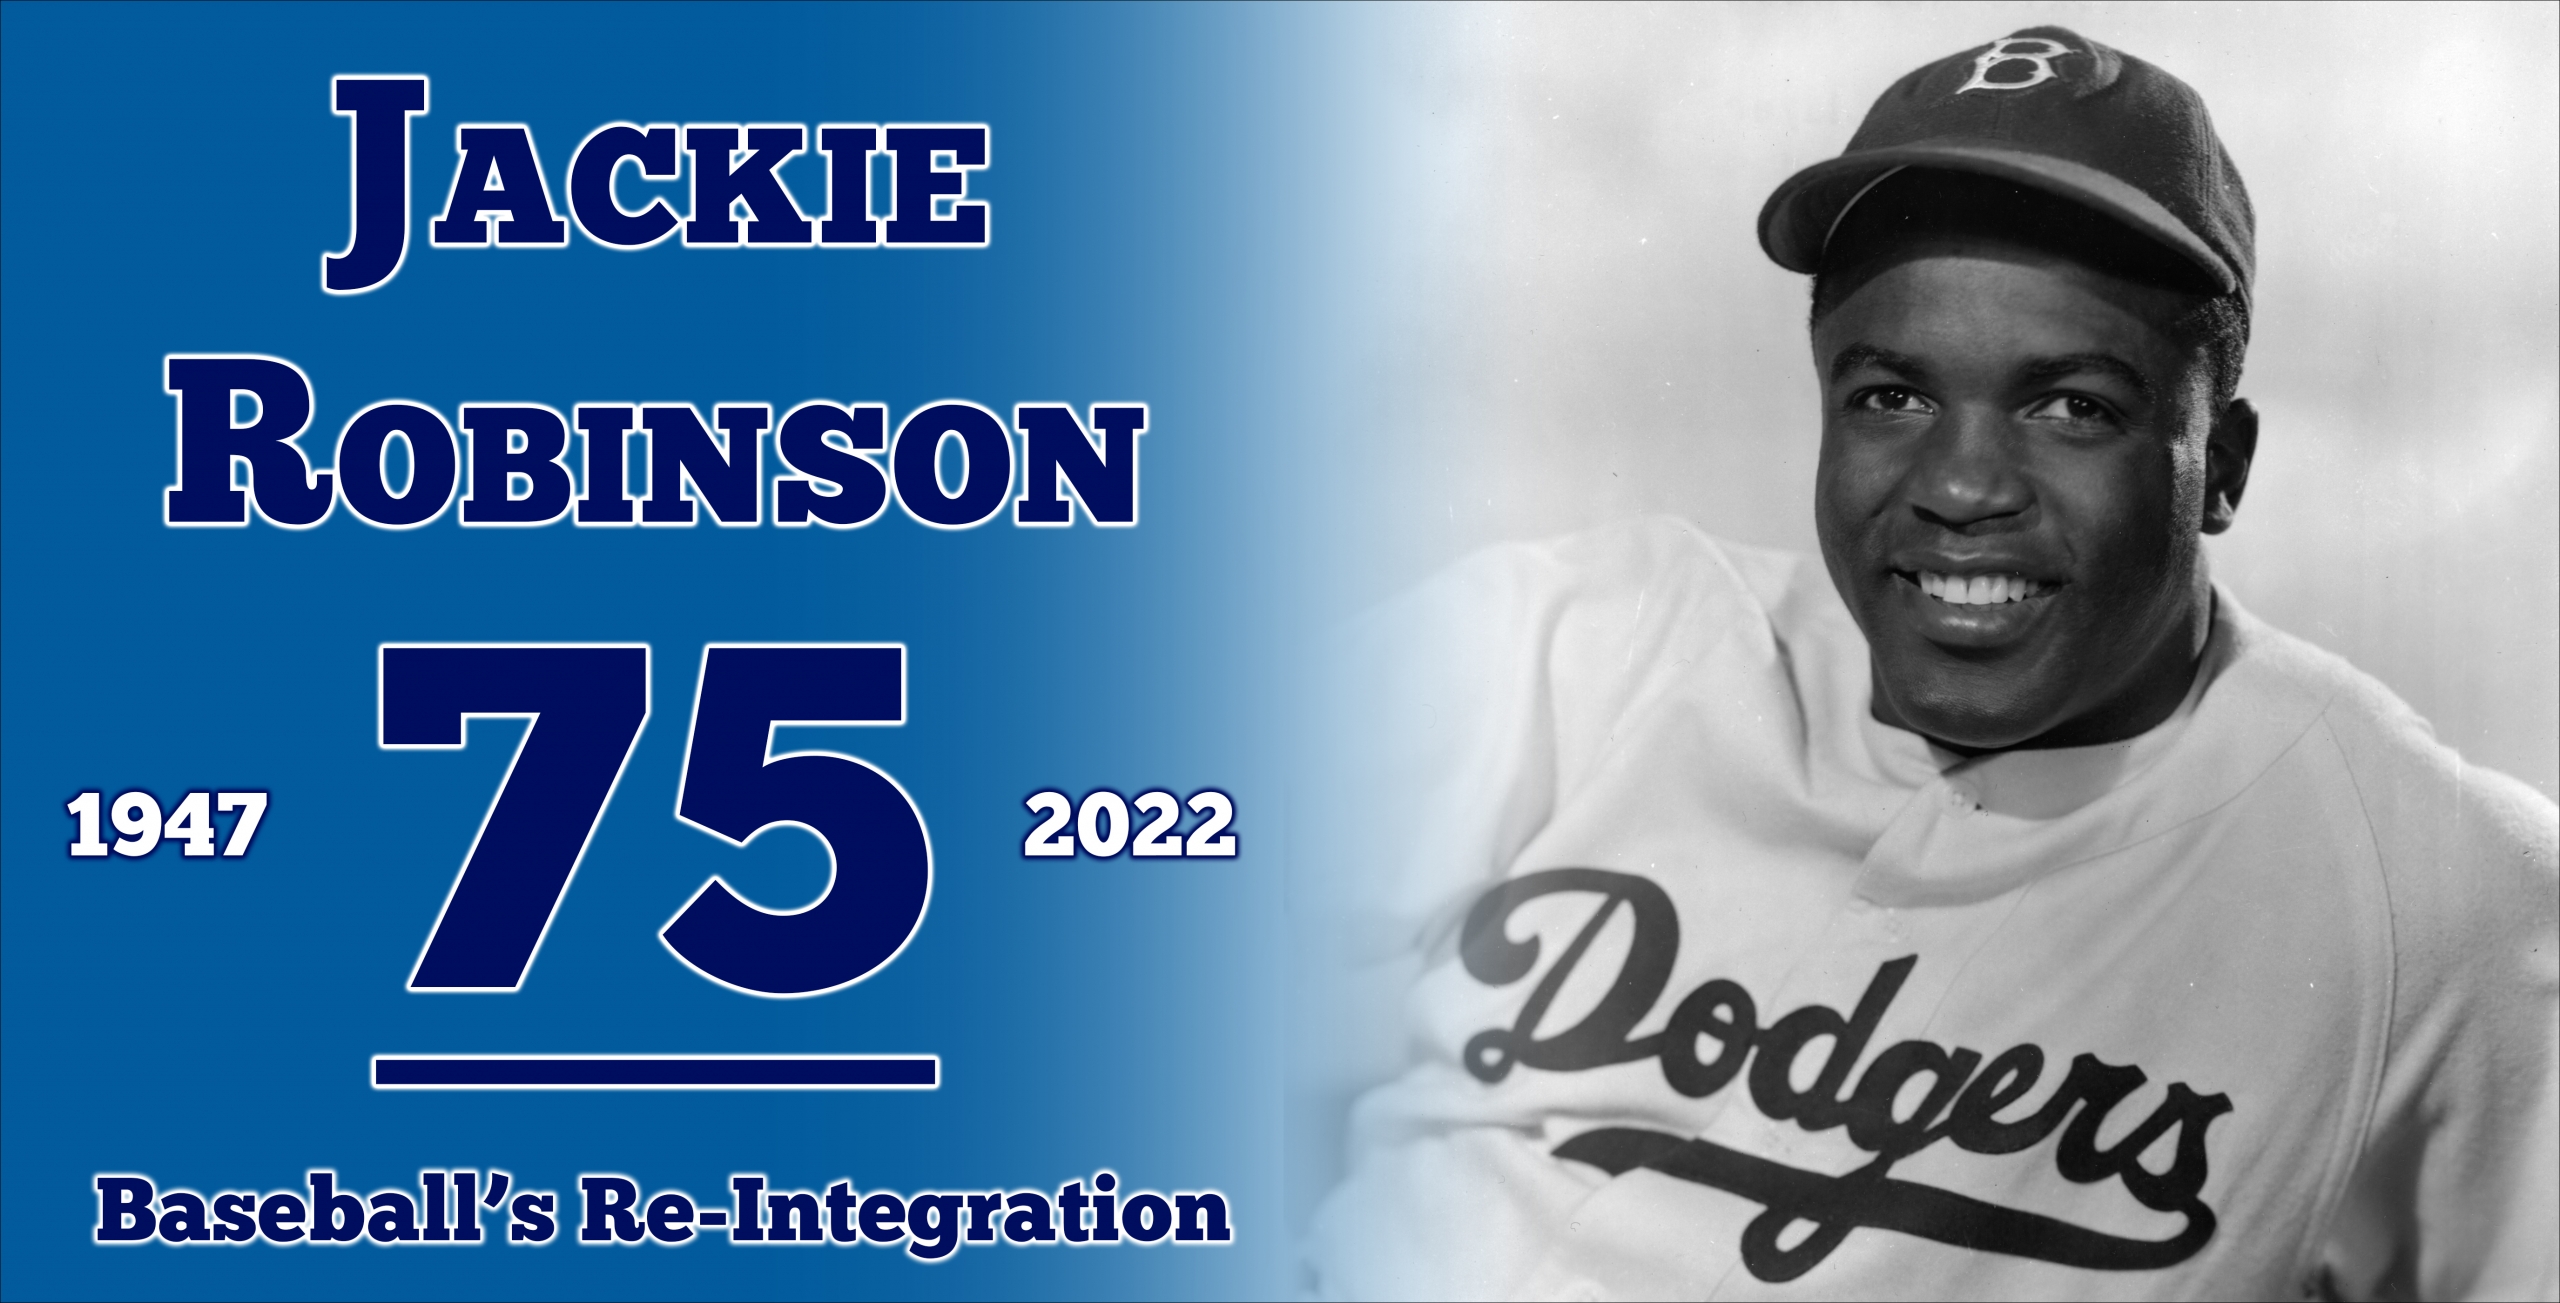 Jackie Robinson 75: Baseball's Re-Integration